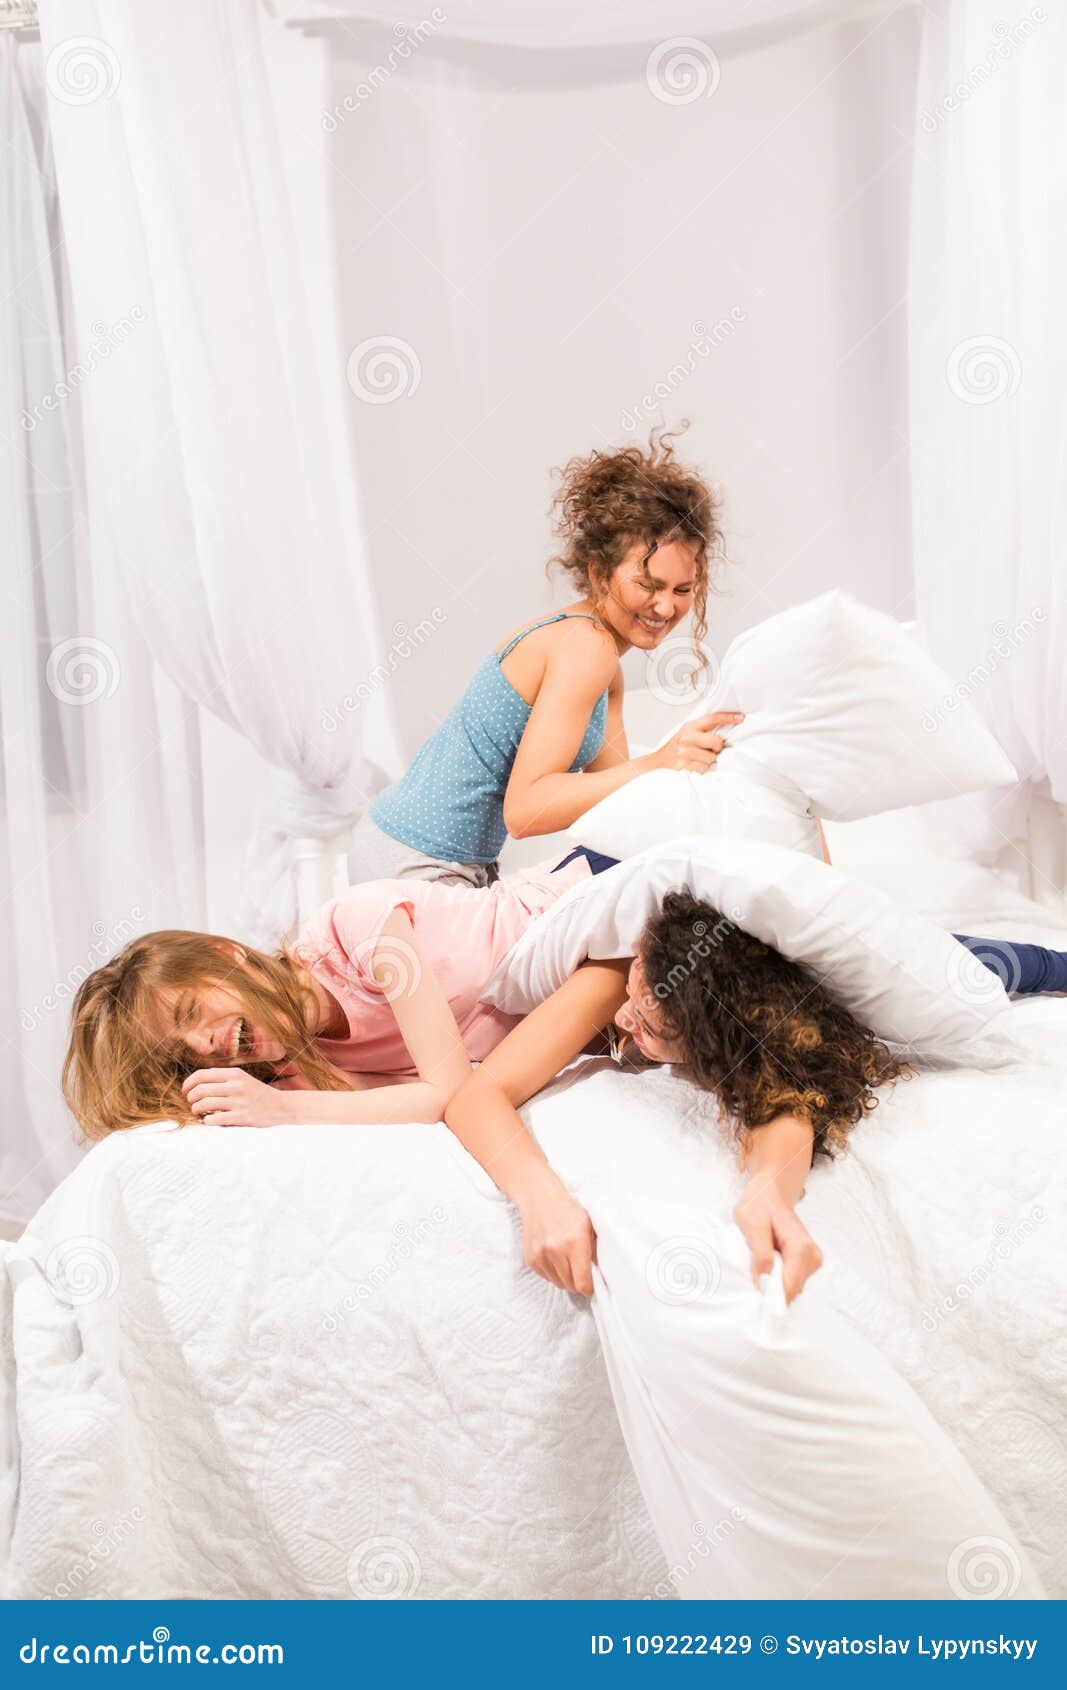 Girls In Bed Having Pillow Fight In Paj